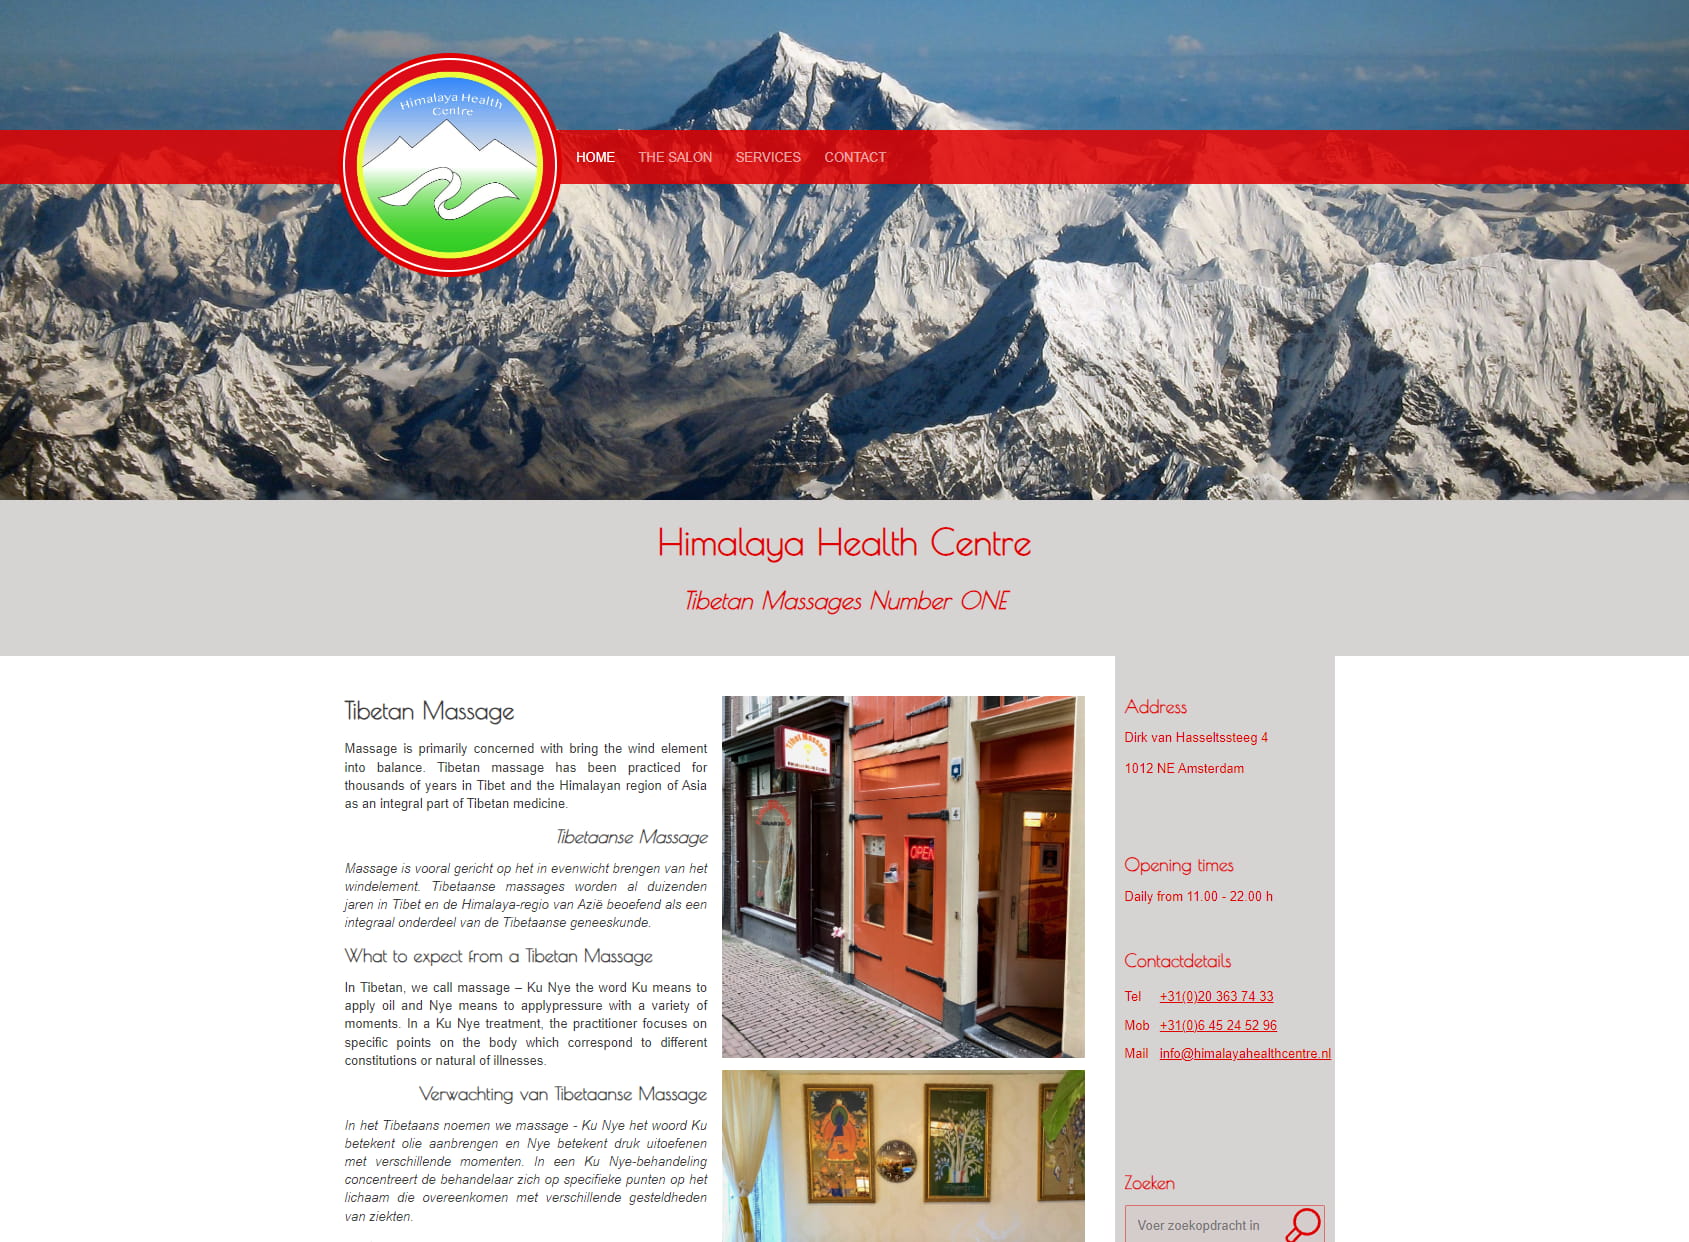 Himalaya Health Centre - Number One Tibetan Massages